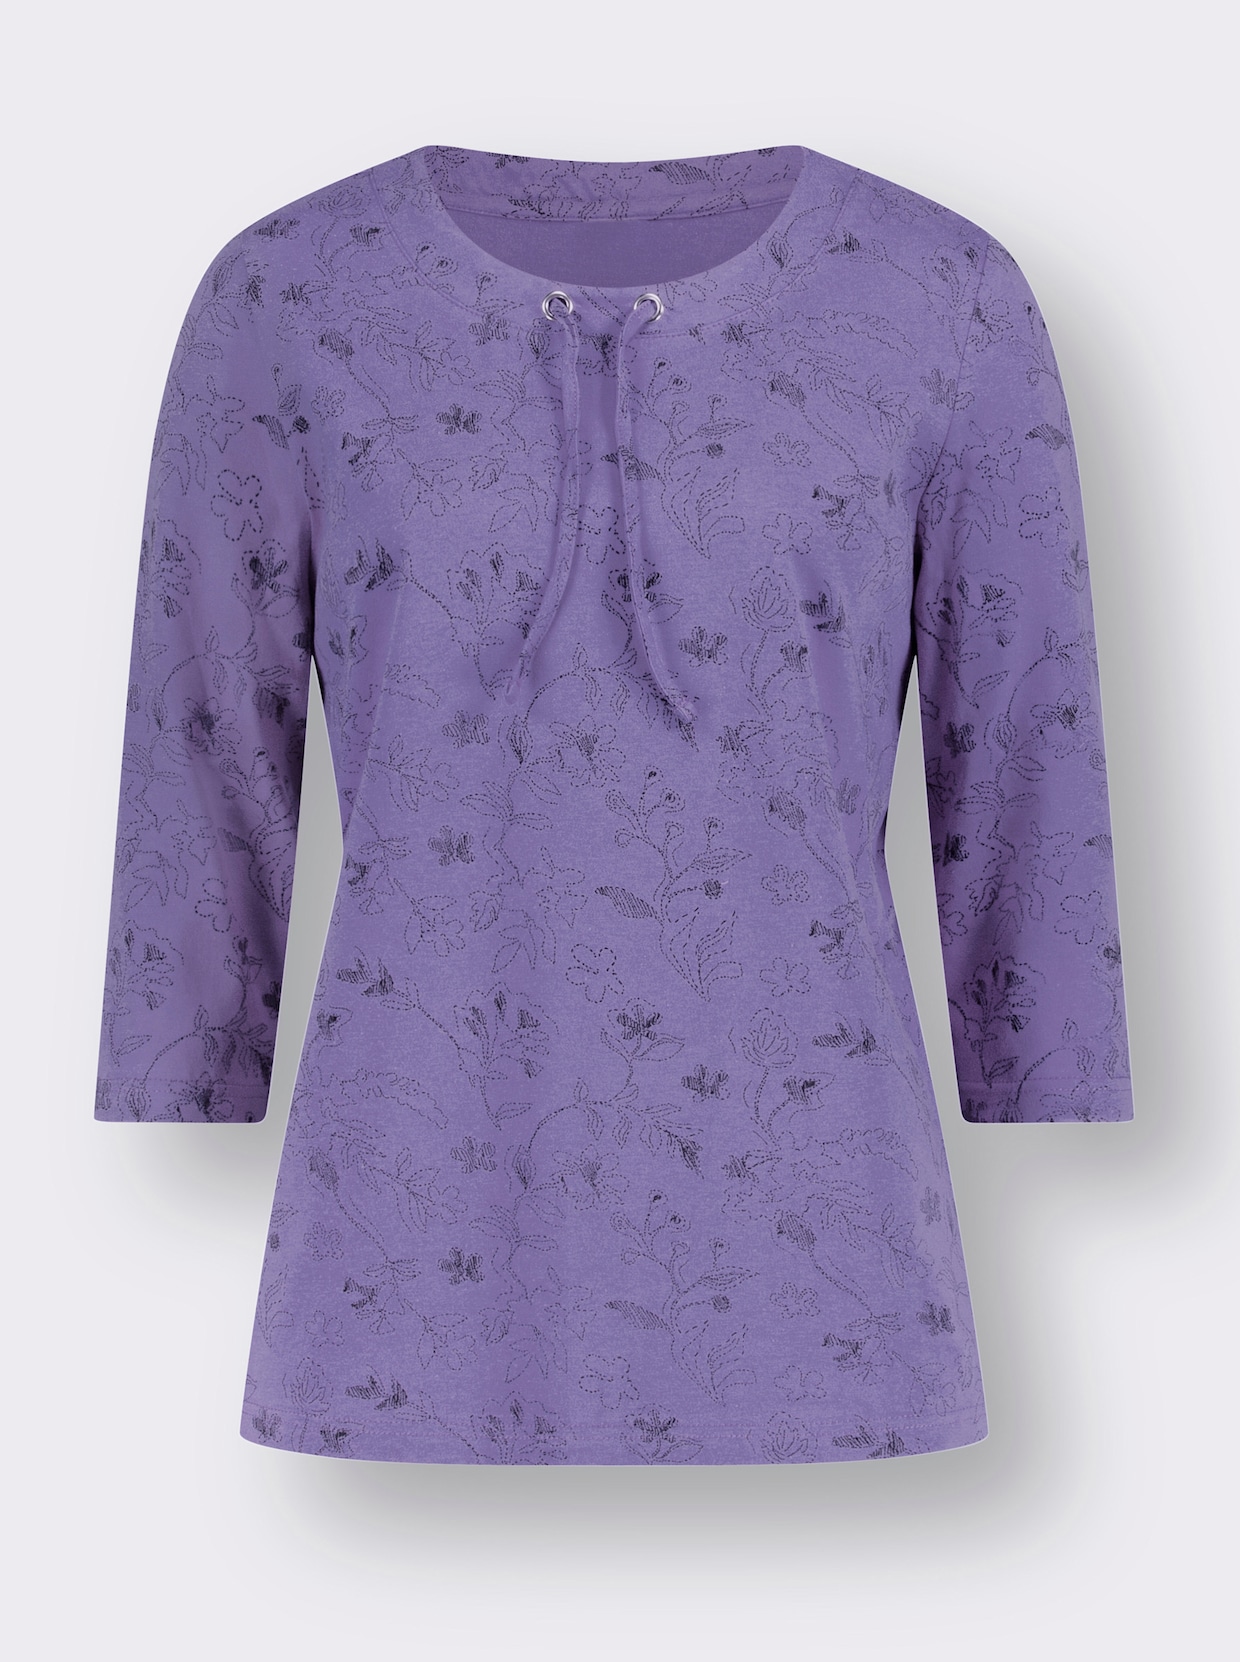 2-in-1-Shirt - lavendel-graphit-bedruckt